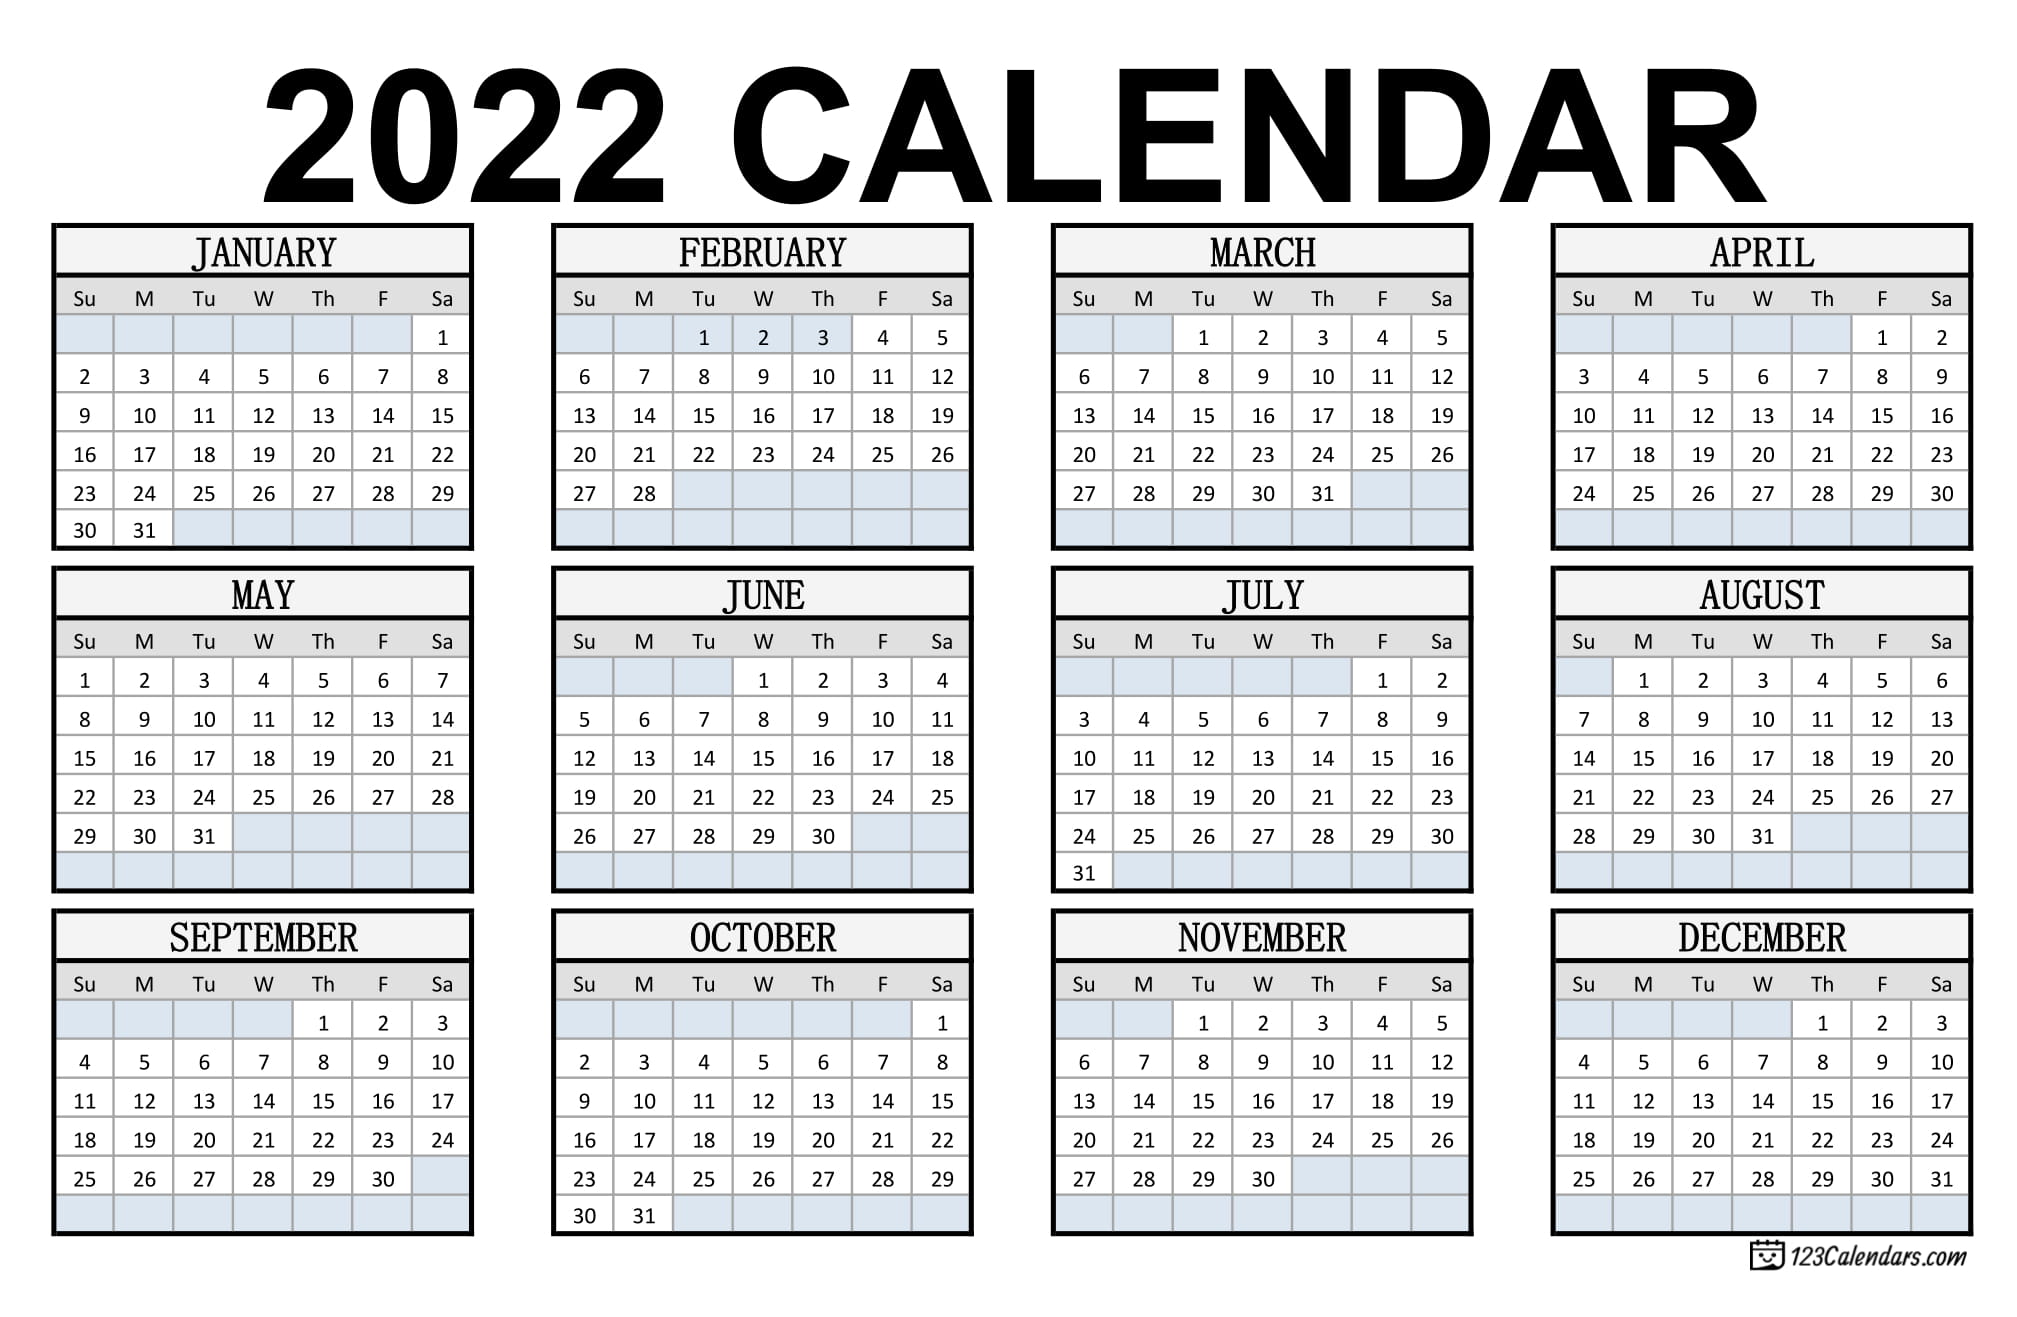 Printable 2022 Yearly Calendar Year 2022 Calendar Templates | 123Calendars.com